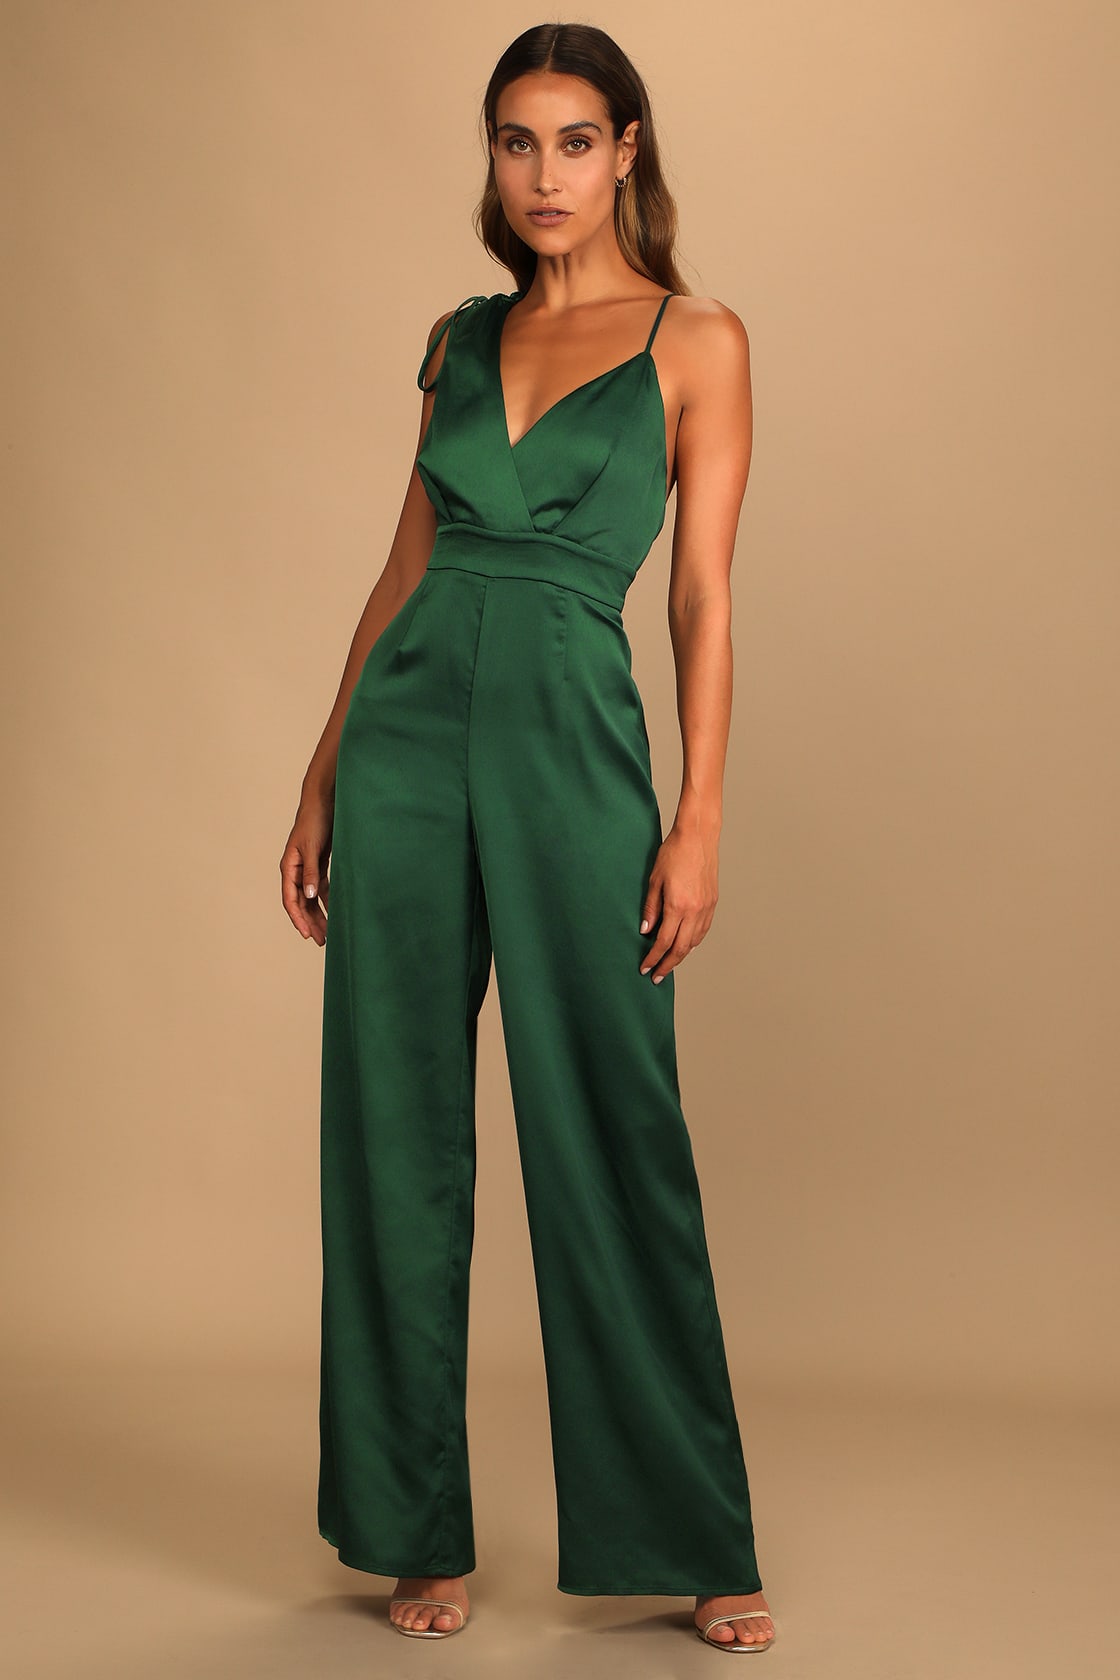 Emerald Green Satin Asymmetrical Wide-Leg Jumpsuit for Wedding Guests